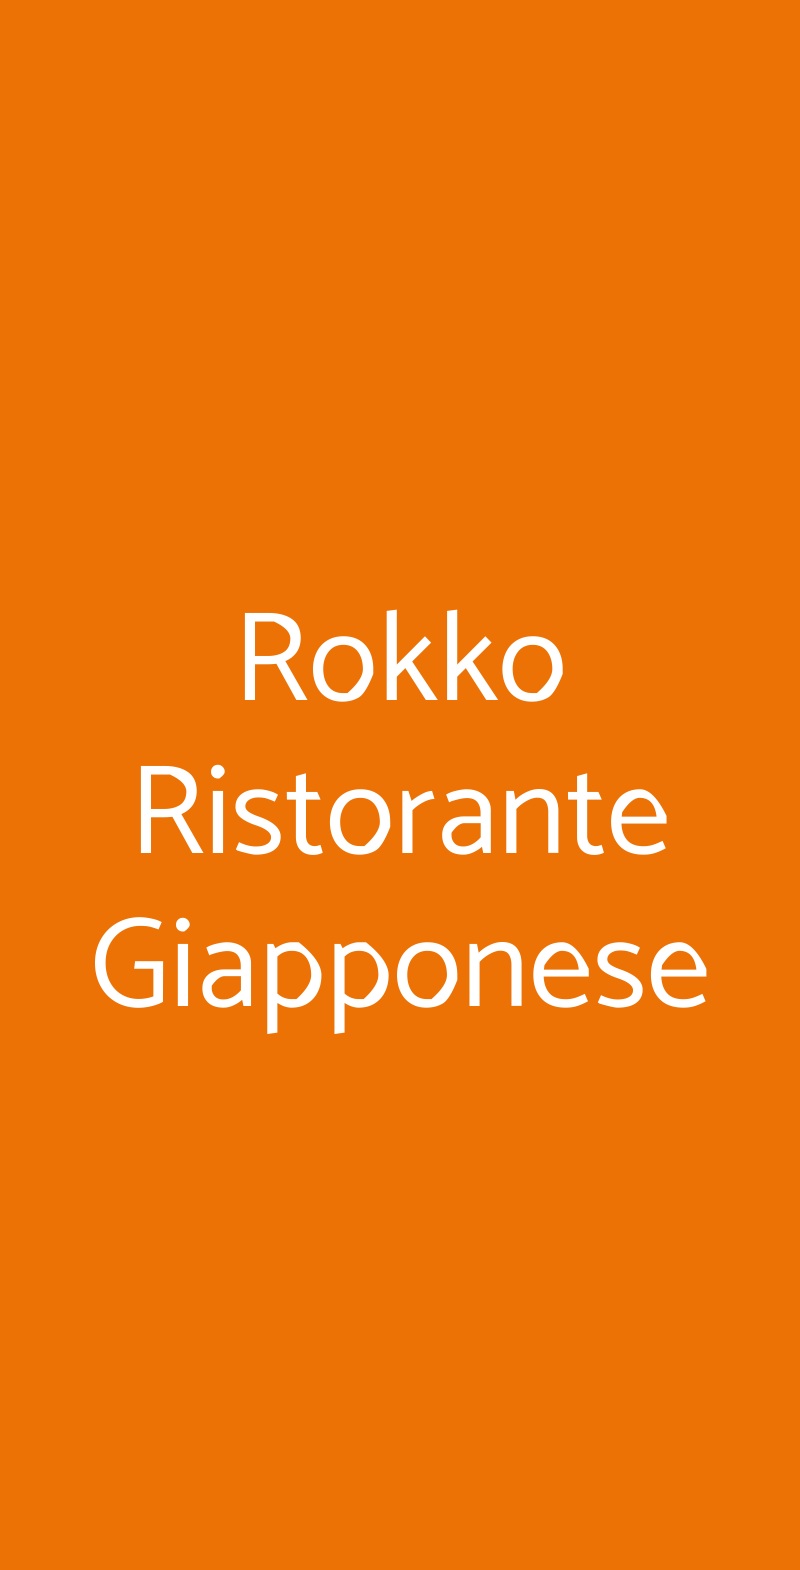 Rokko Ristorante Giapponese Roma menù 1 pagina